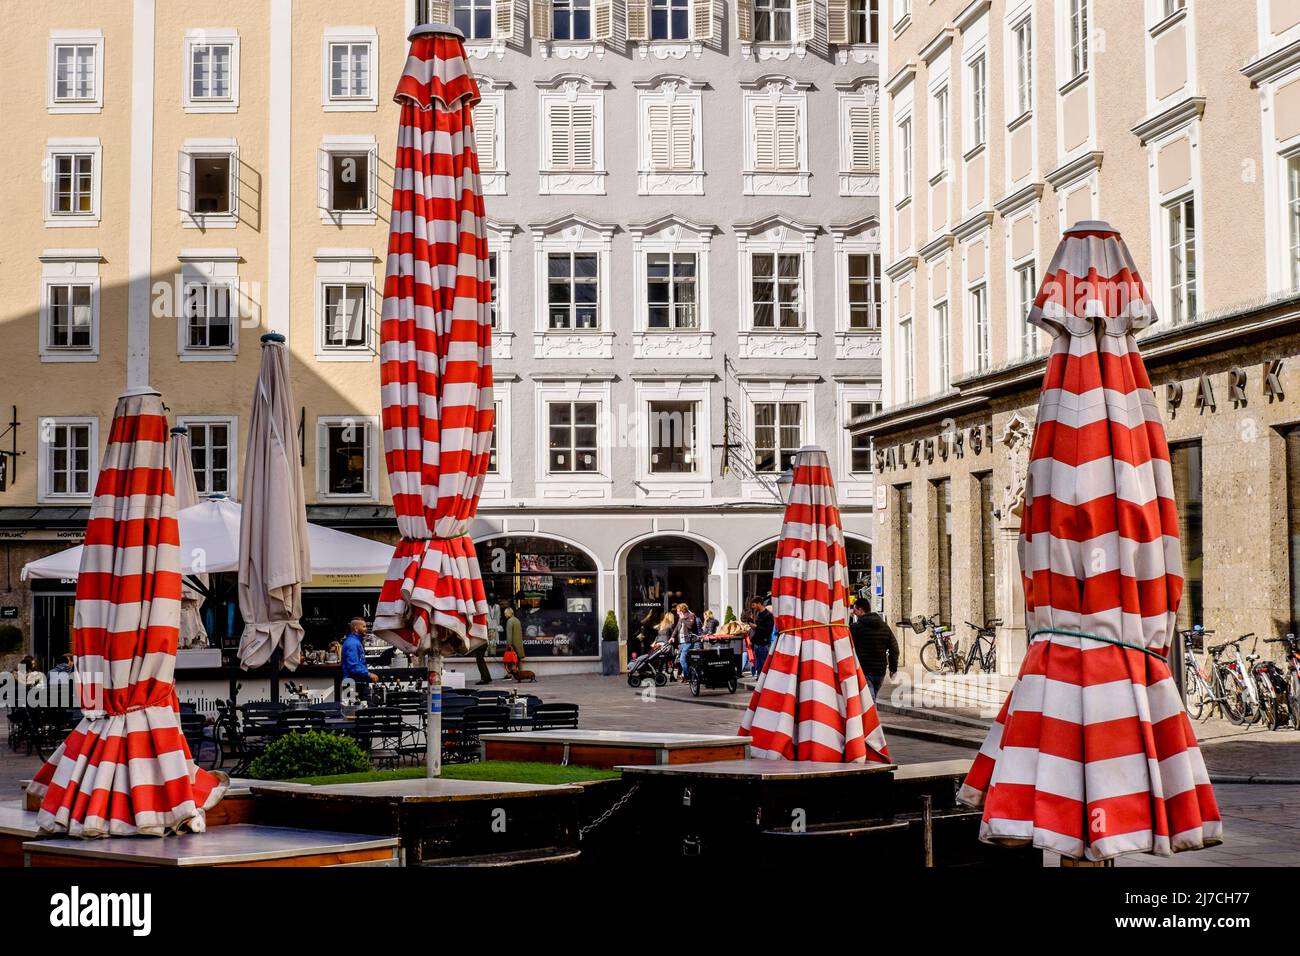 Striped umbrellas and baroque architecture of the Old Market, Salzburg, Austria. Stock Photo